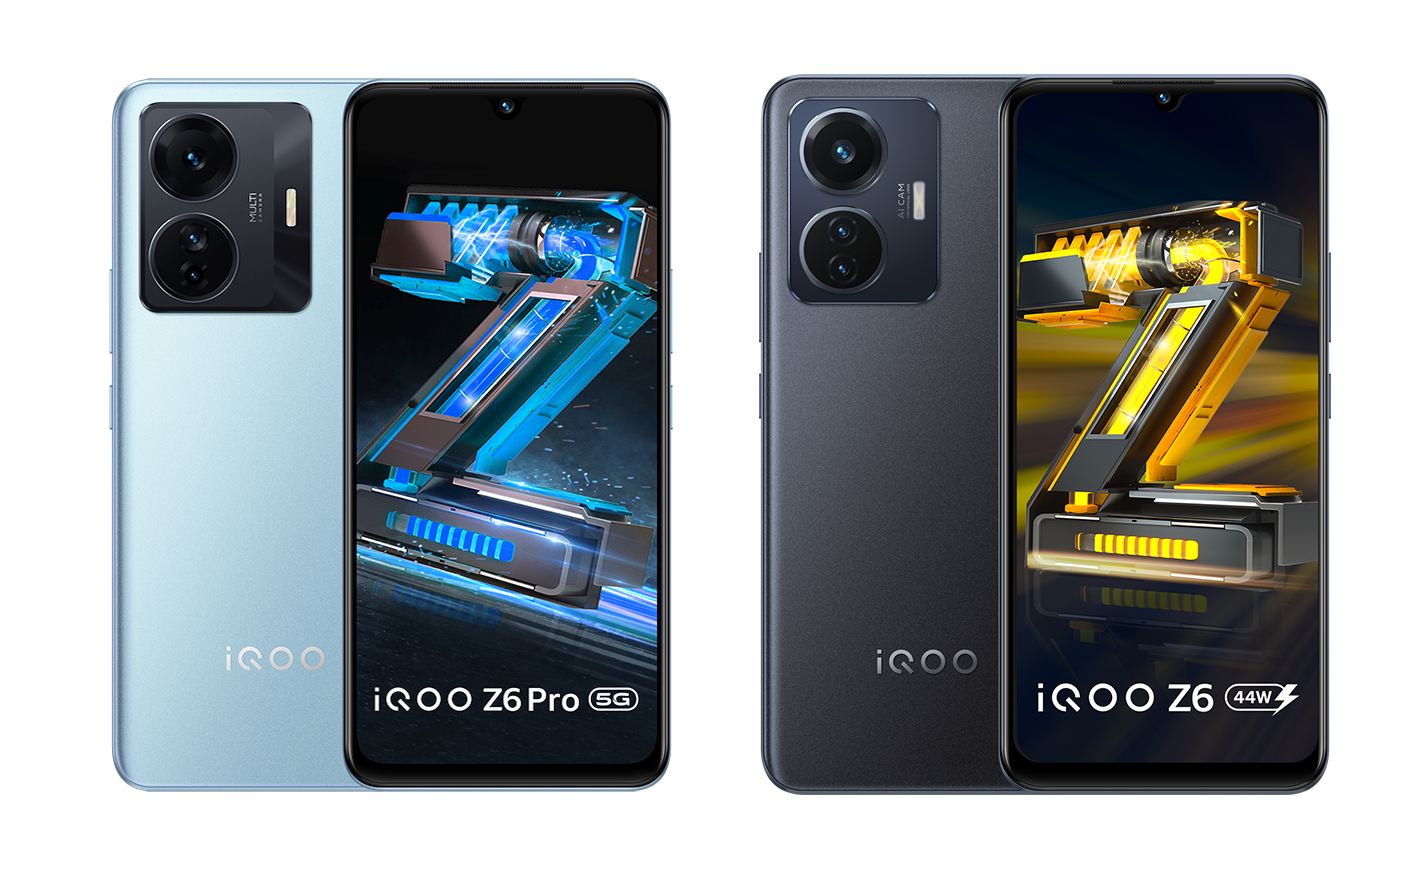 iQOO Z6 Pro 5G (left) and iQOO Z6 44W (right)